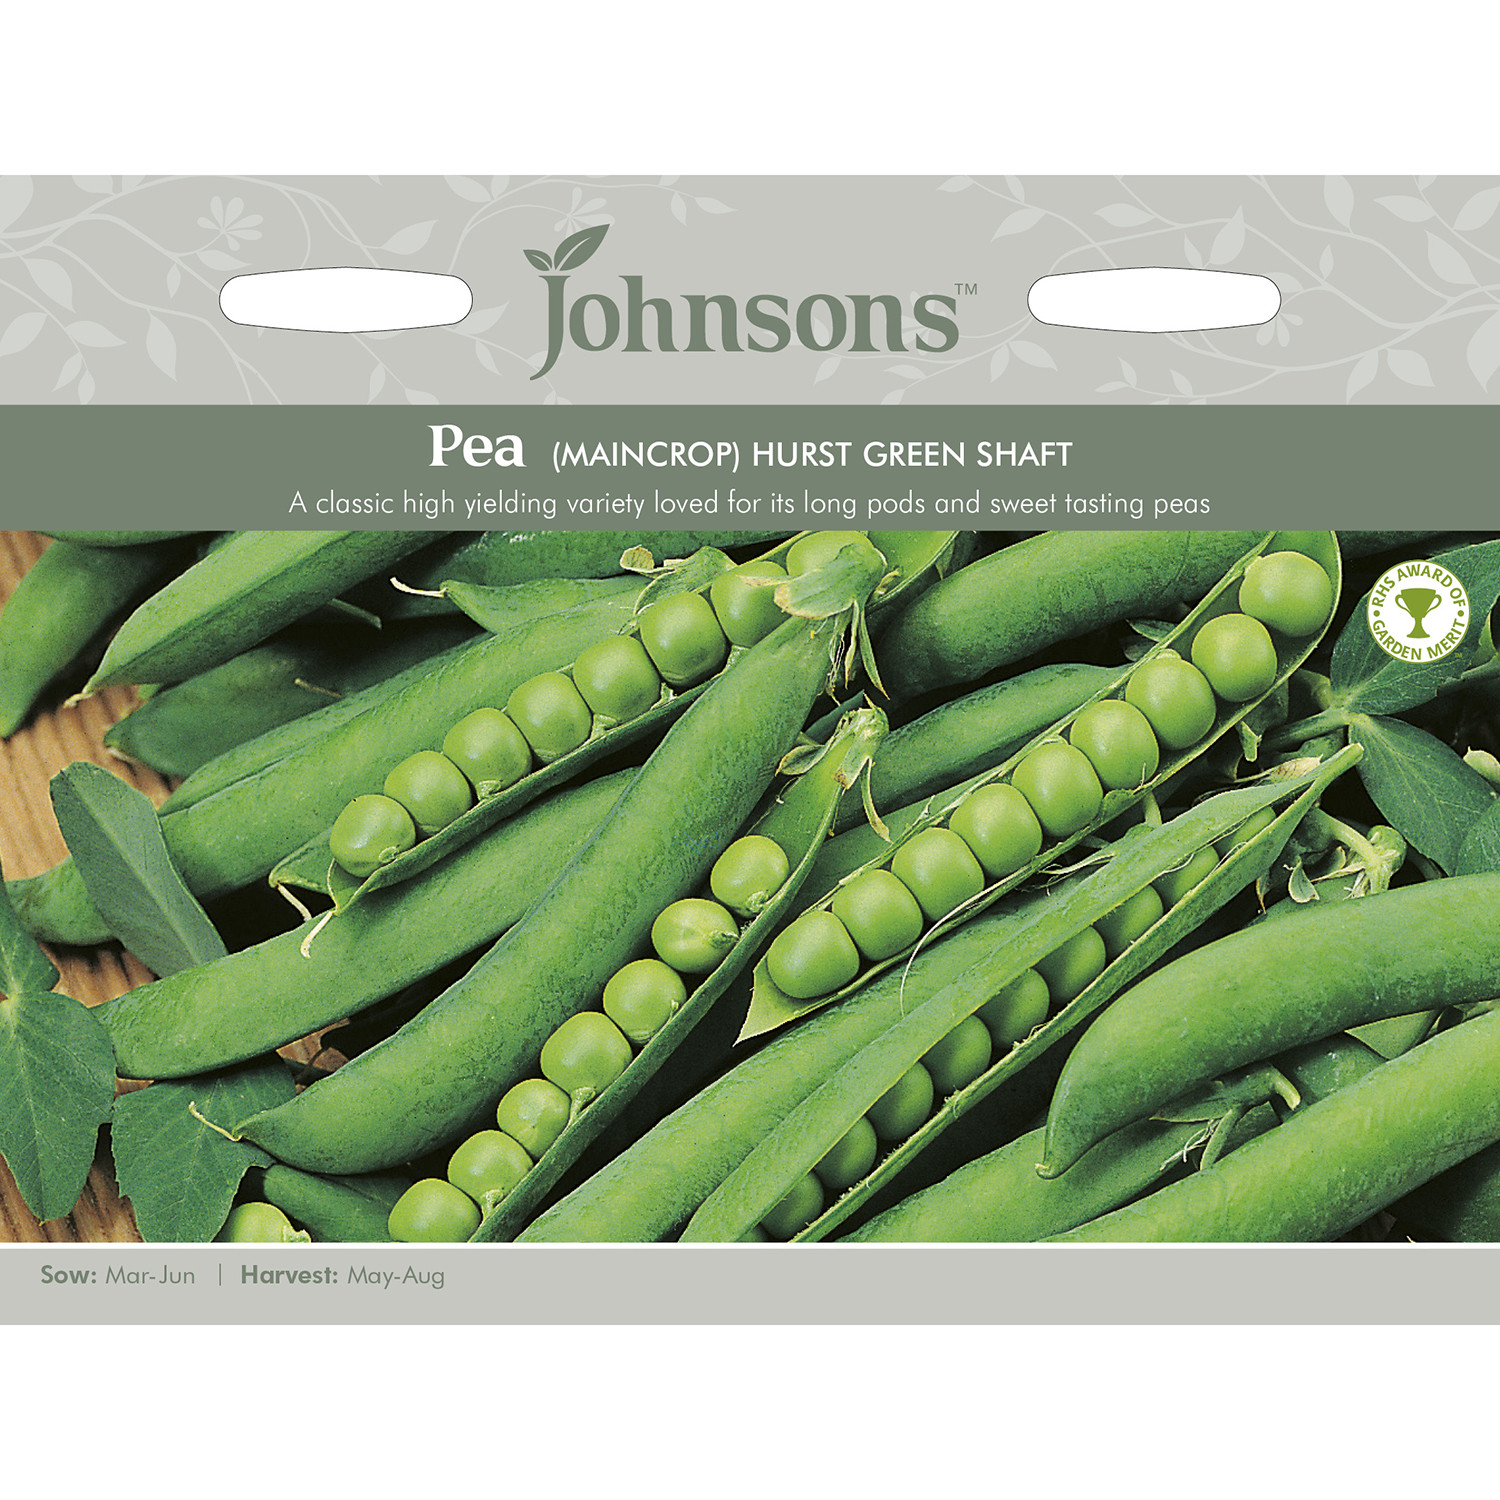 Johnsons Hurst Green Shaft Pea Seeds Image 2